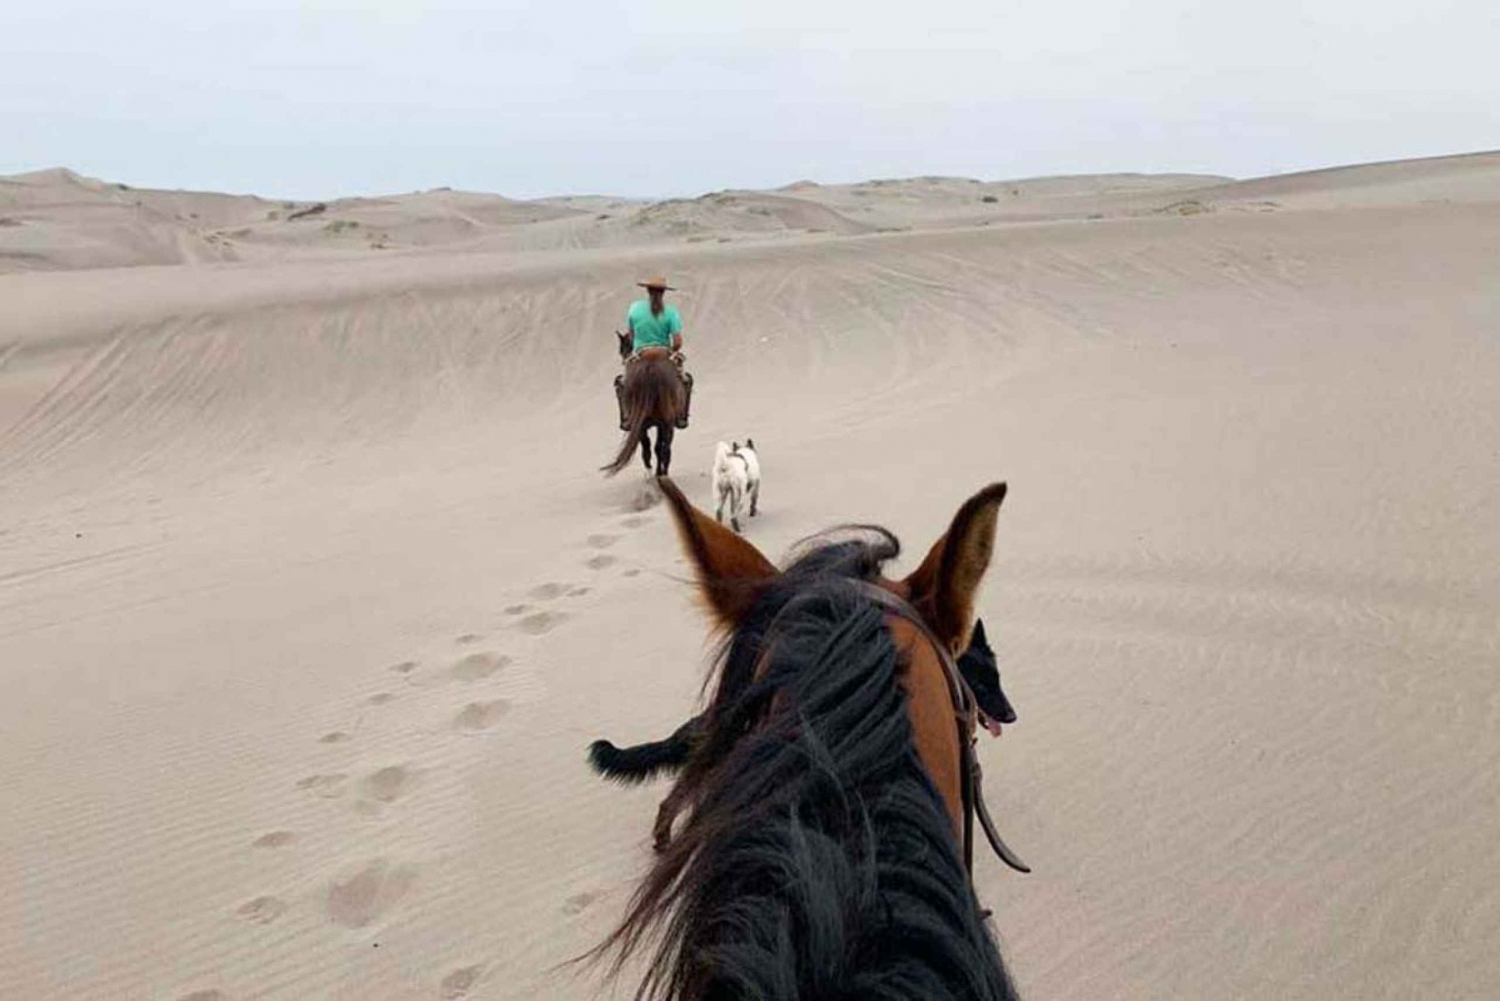 Pacific Horseback Riding on Beach & Sand Dunes